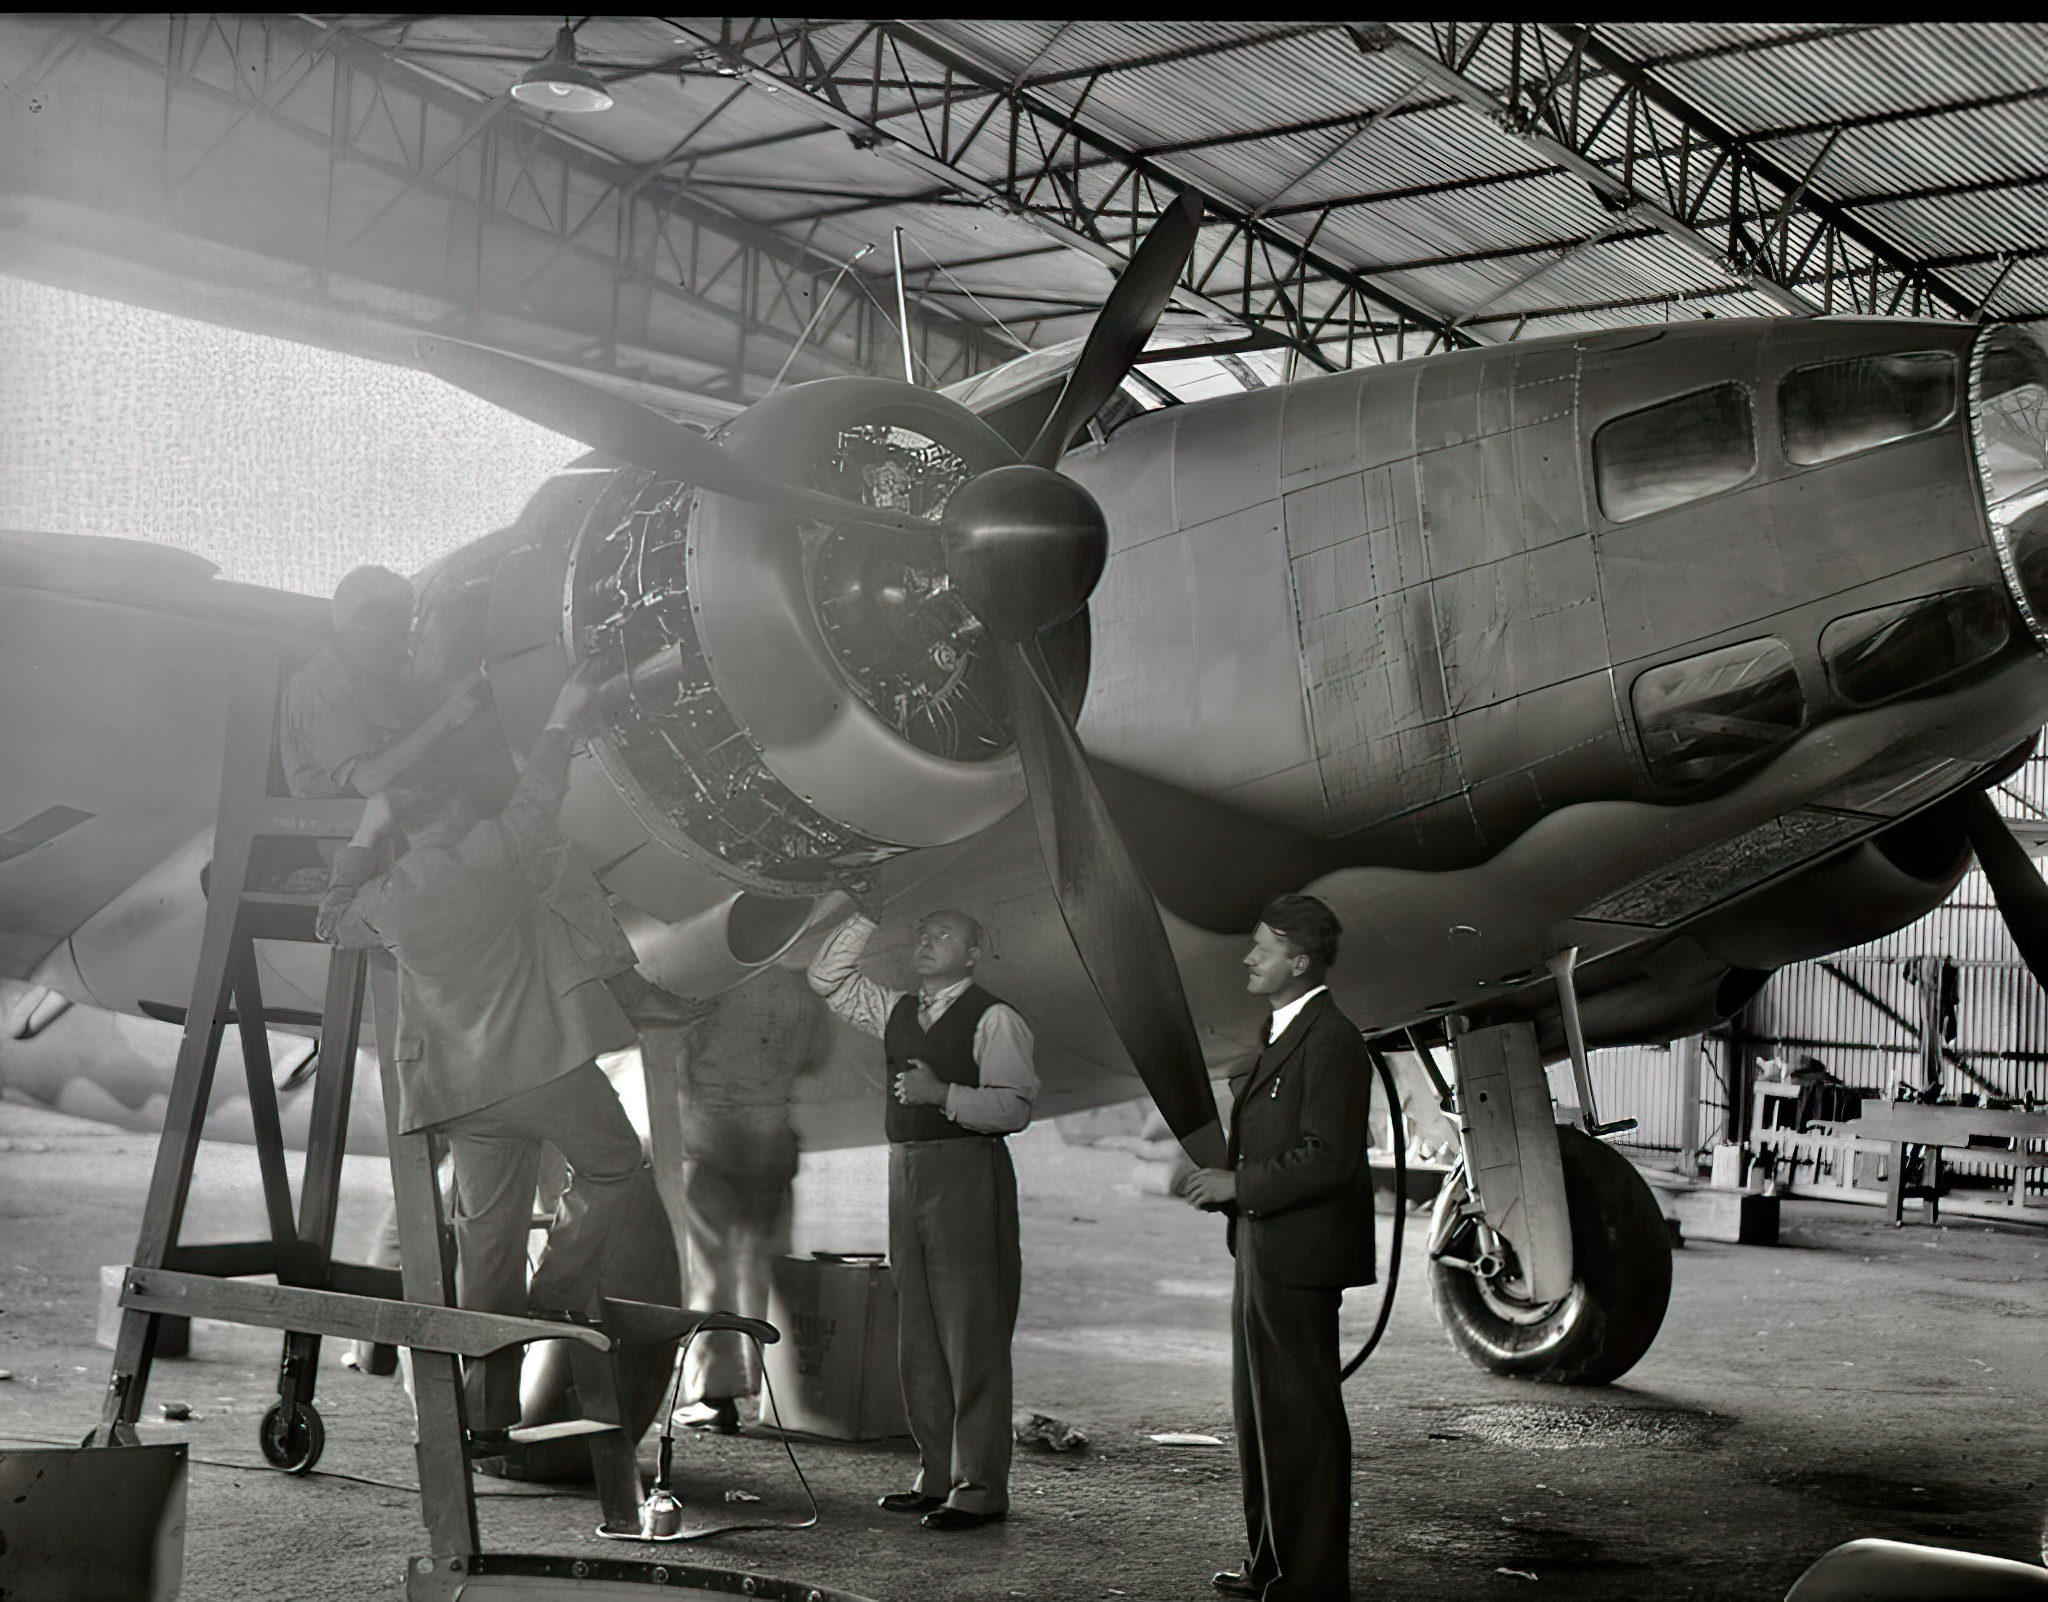 Lockheed Hudson Bomber